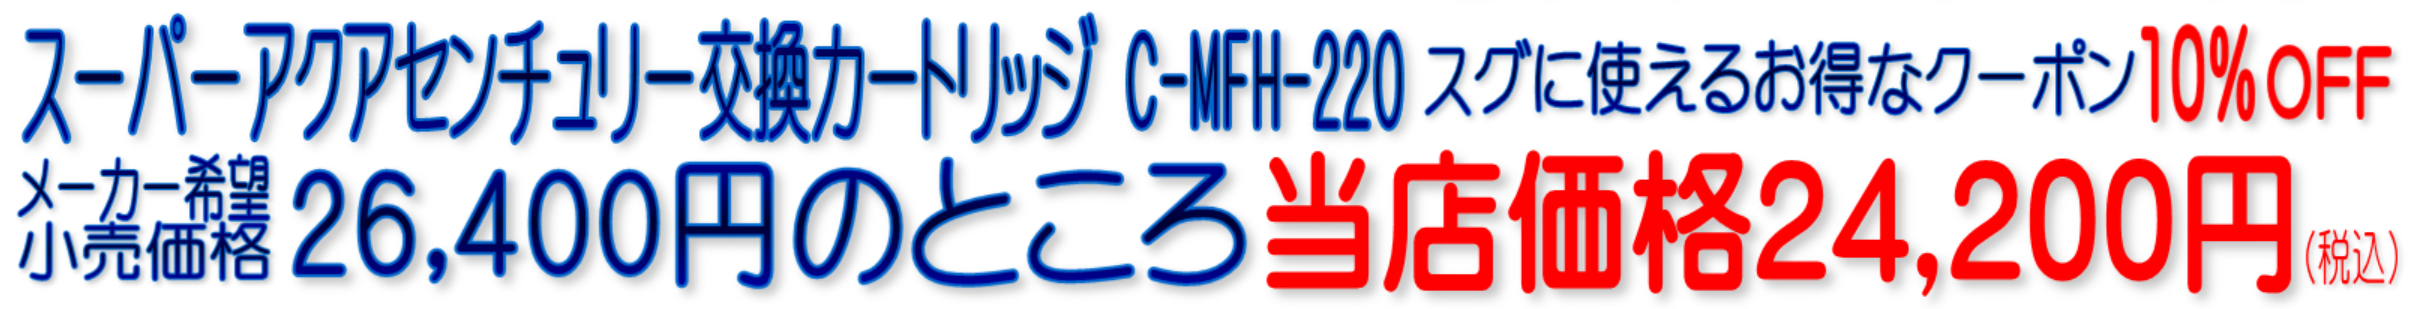 MFH-221 C-MFH-221 スーパーアクアセンチュリー